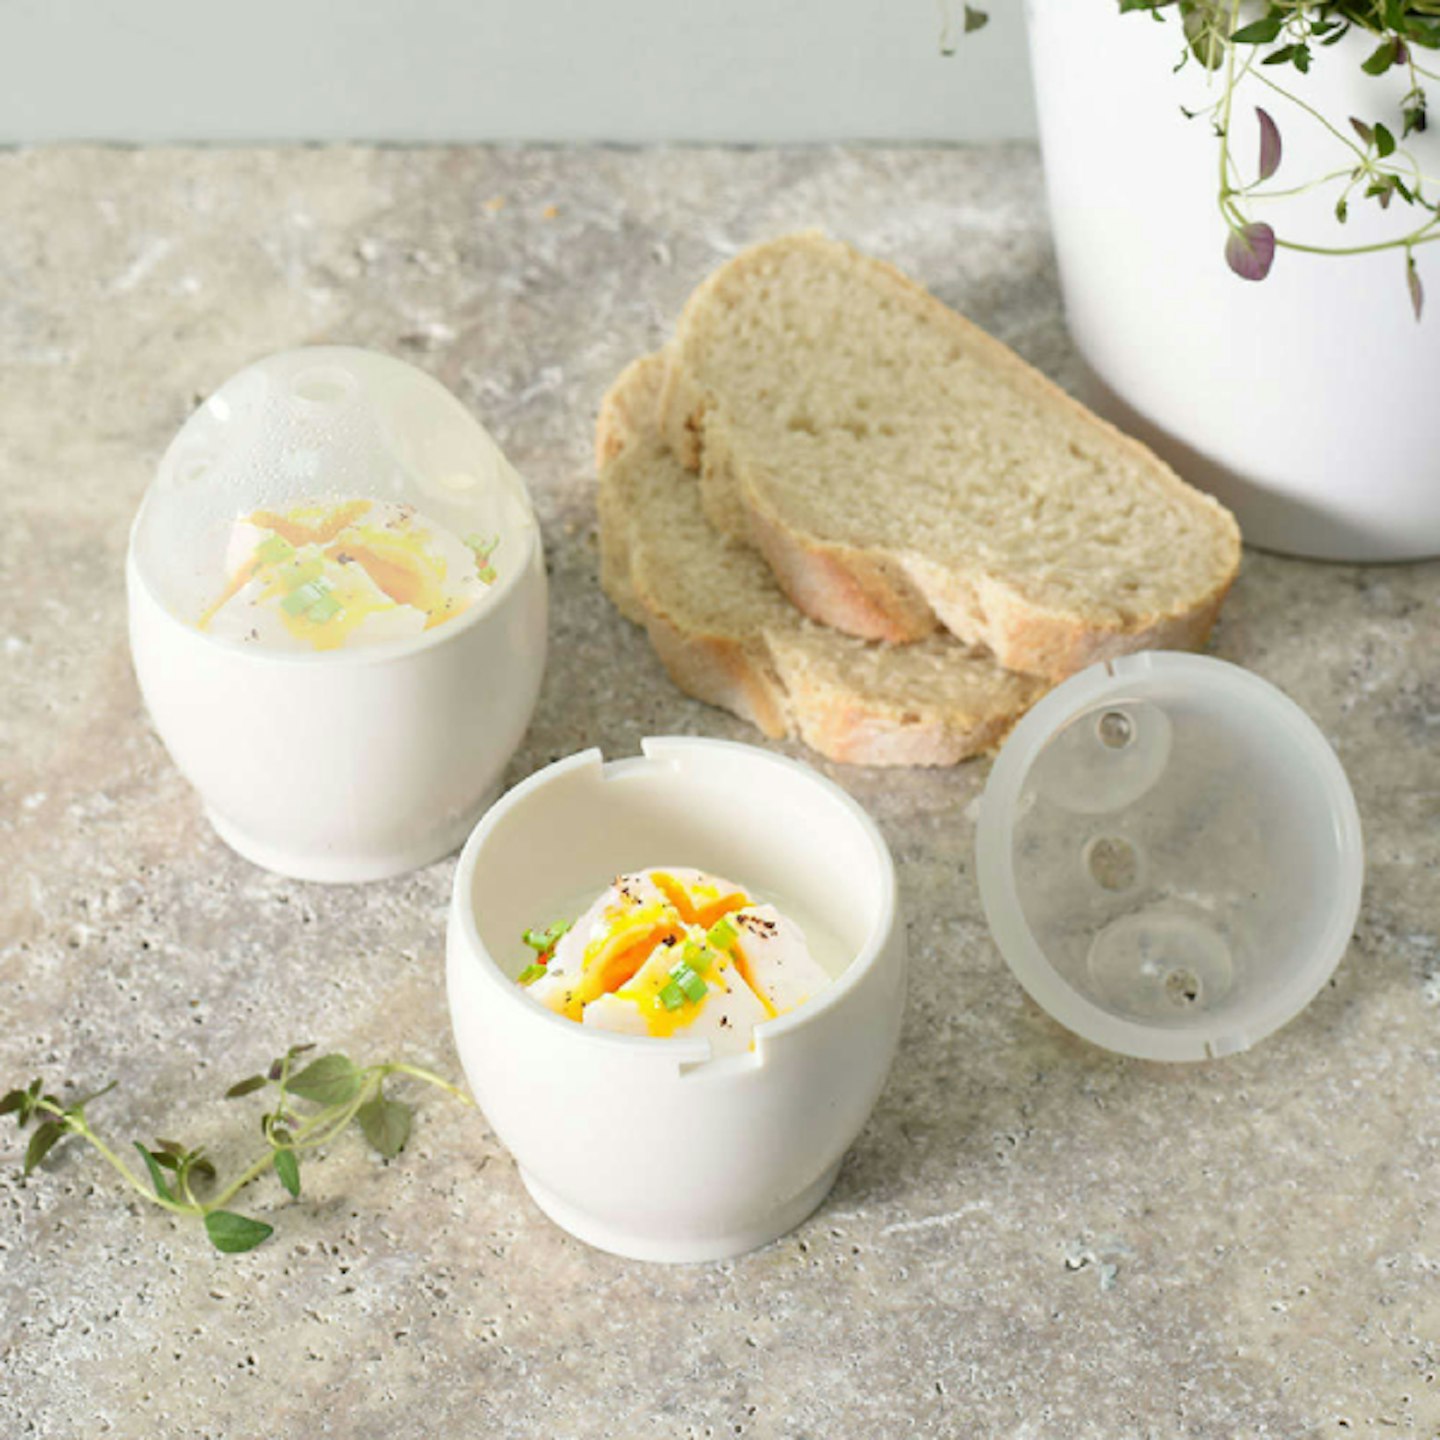 Microwave Egg Poacher Saves Time Eggs Made Easy No Safety Mess E6R9